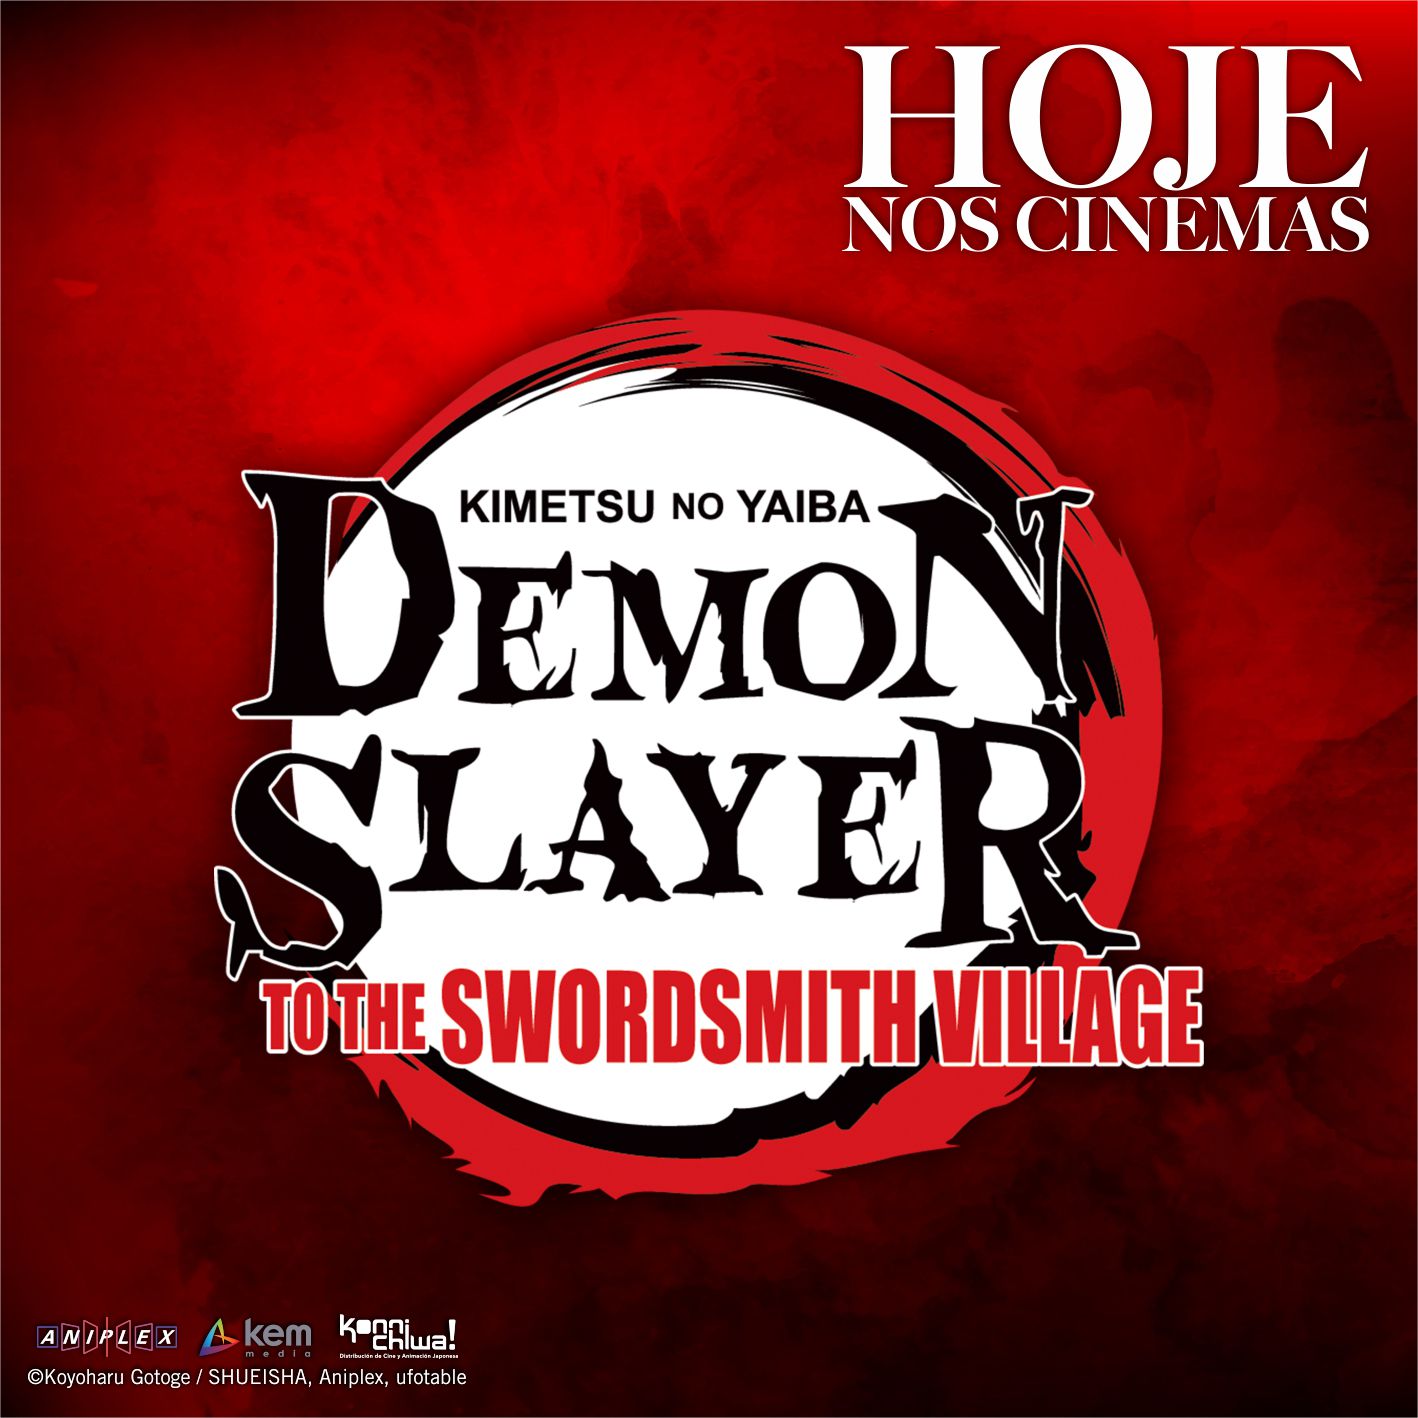 Demon Slayer: To the Swordsmith Village Chega aos Cinemas!